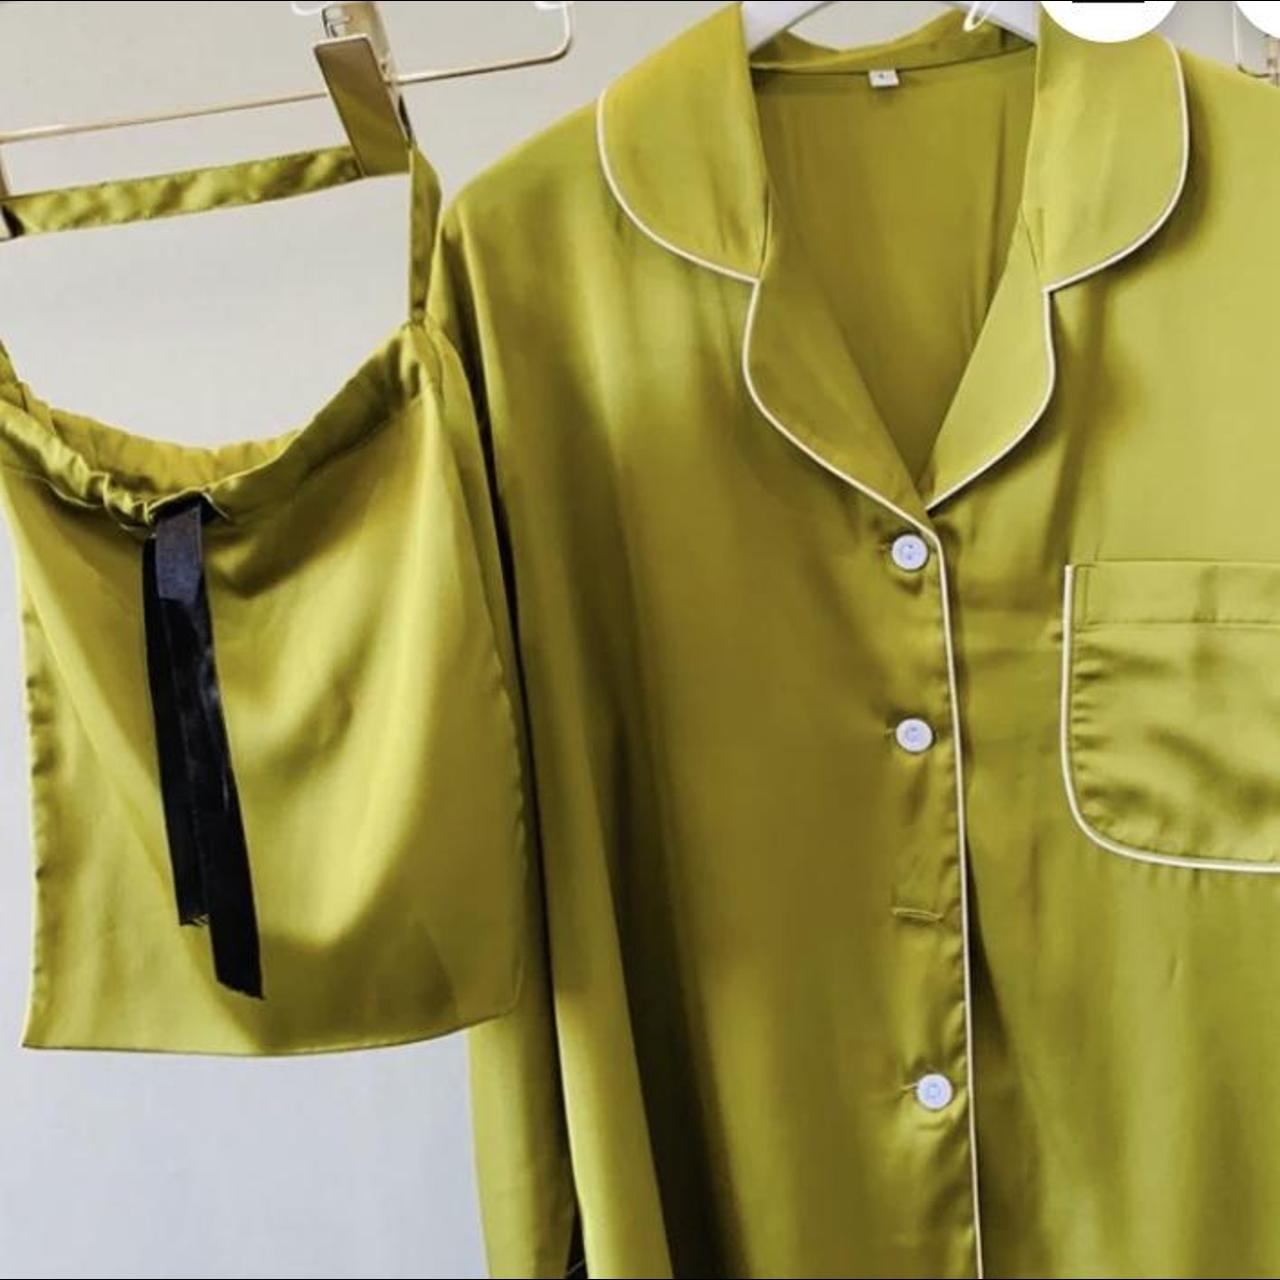 17London Women's Green and Yellow Pajamas (2)